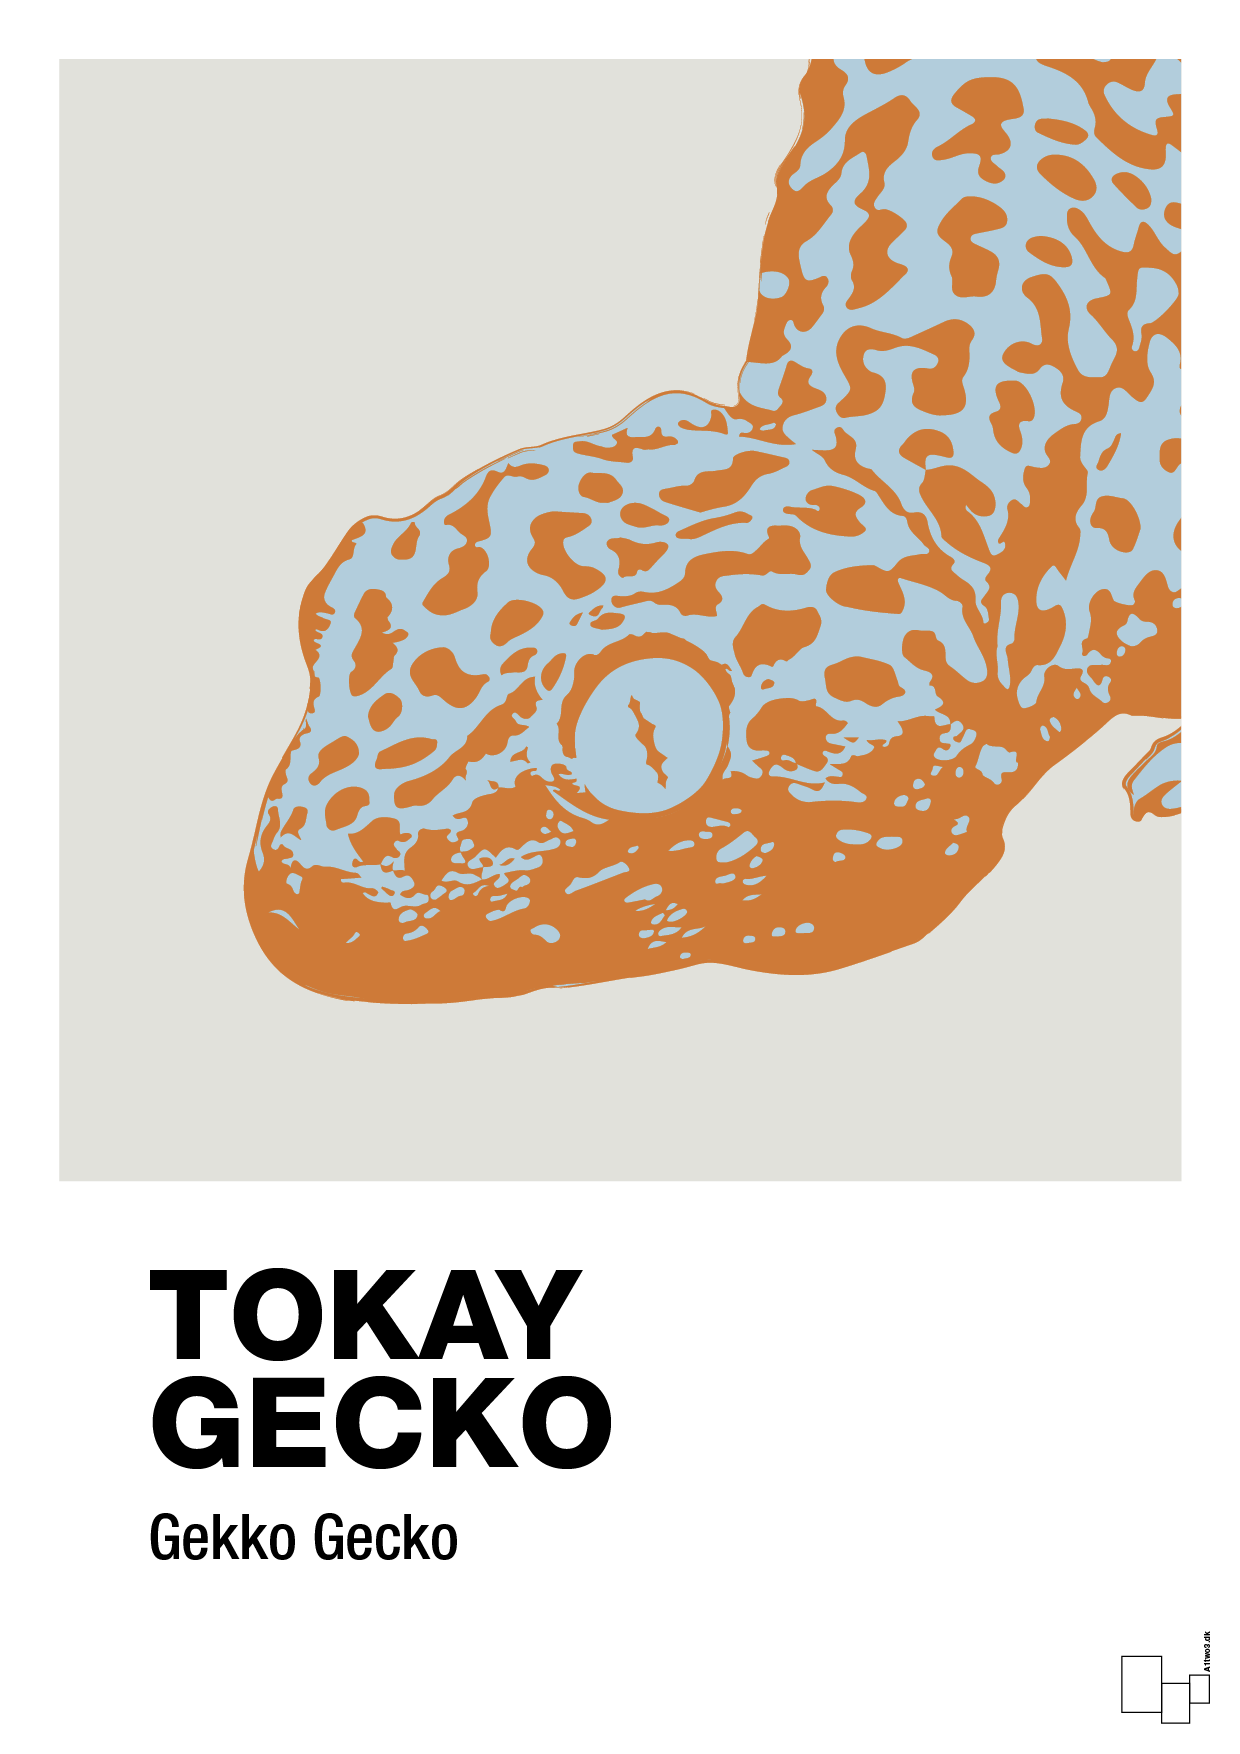 tokay gecko - Plakat med Videnskab i Painters White